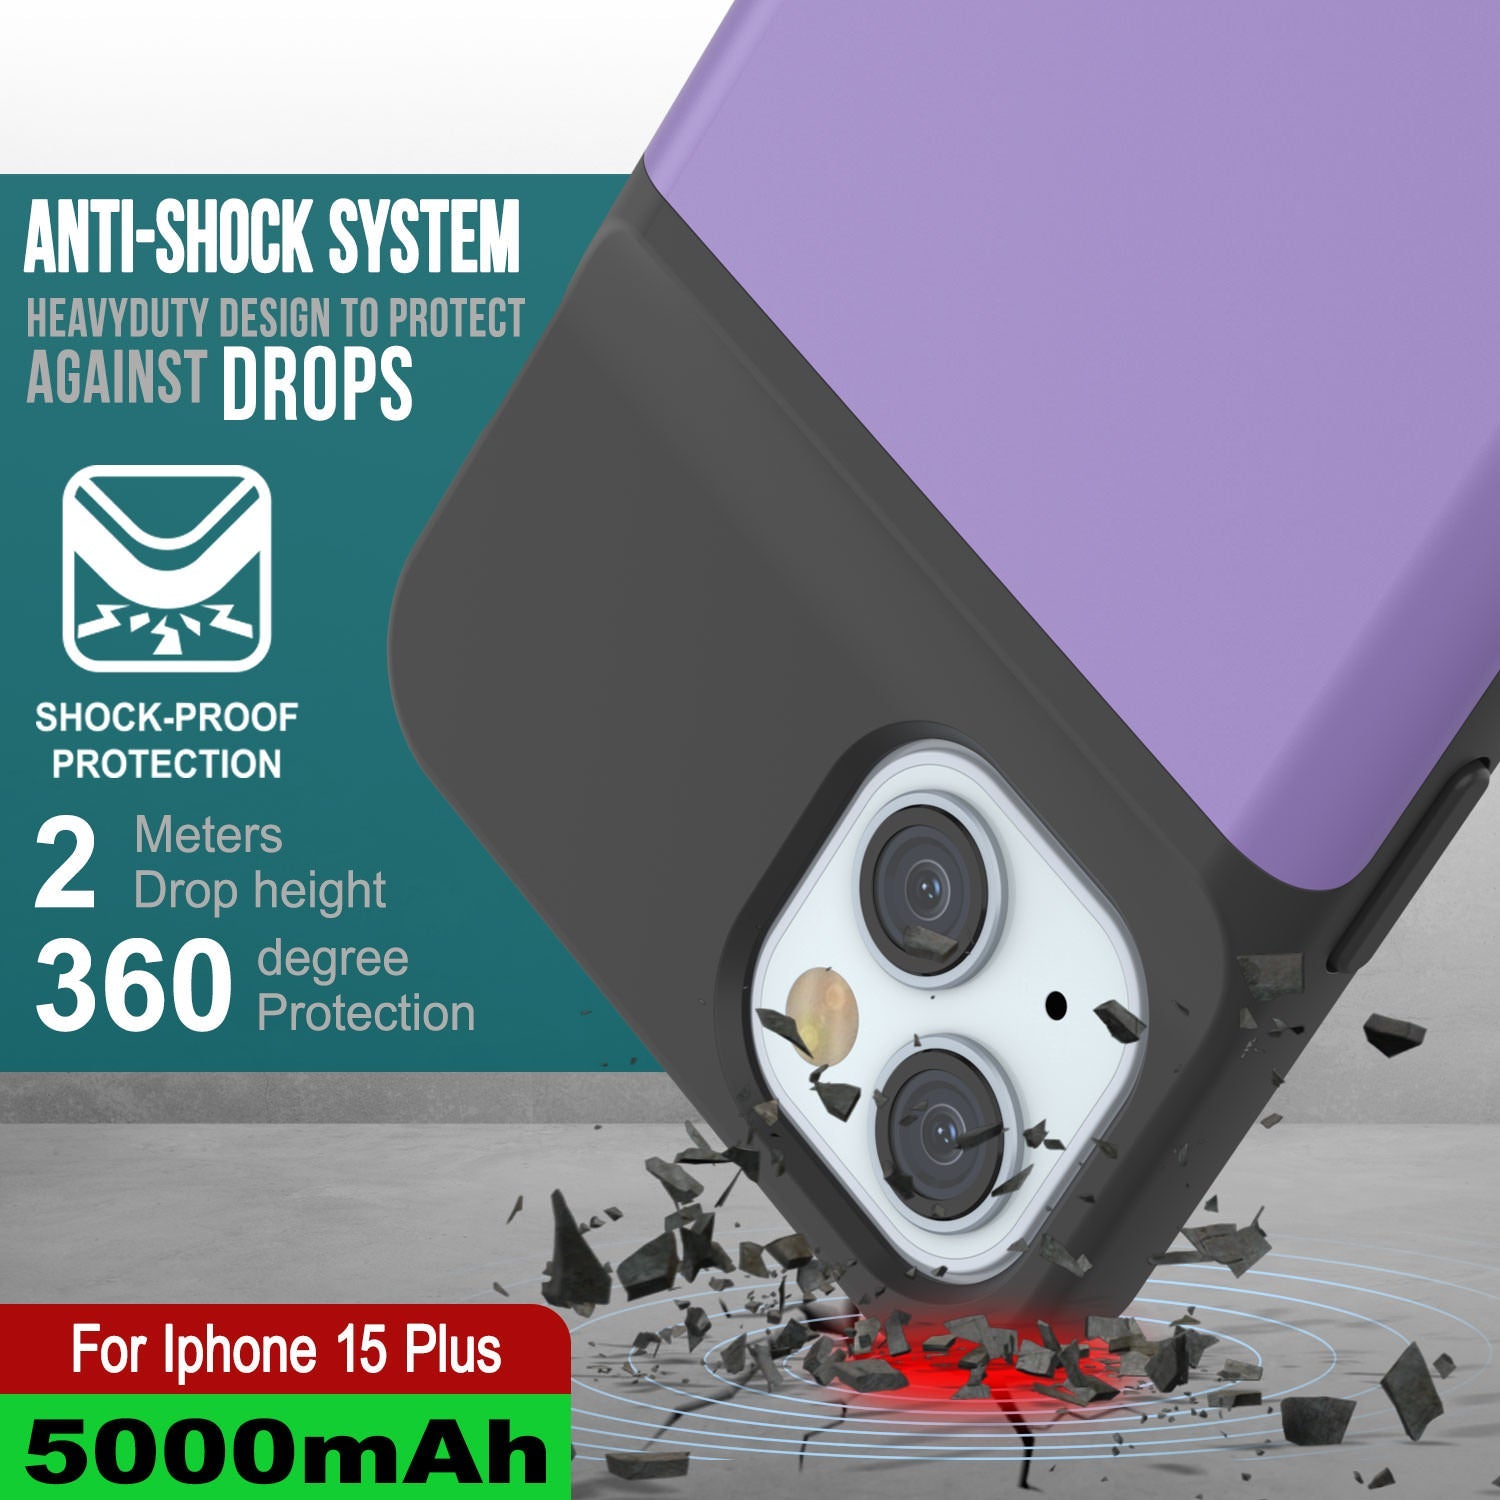 iPhone 15 Plus Battery Case, PunkJuice 5000mAH Fast Charging Power Bank W/ Screen Protector | [Purple]